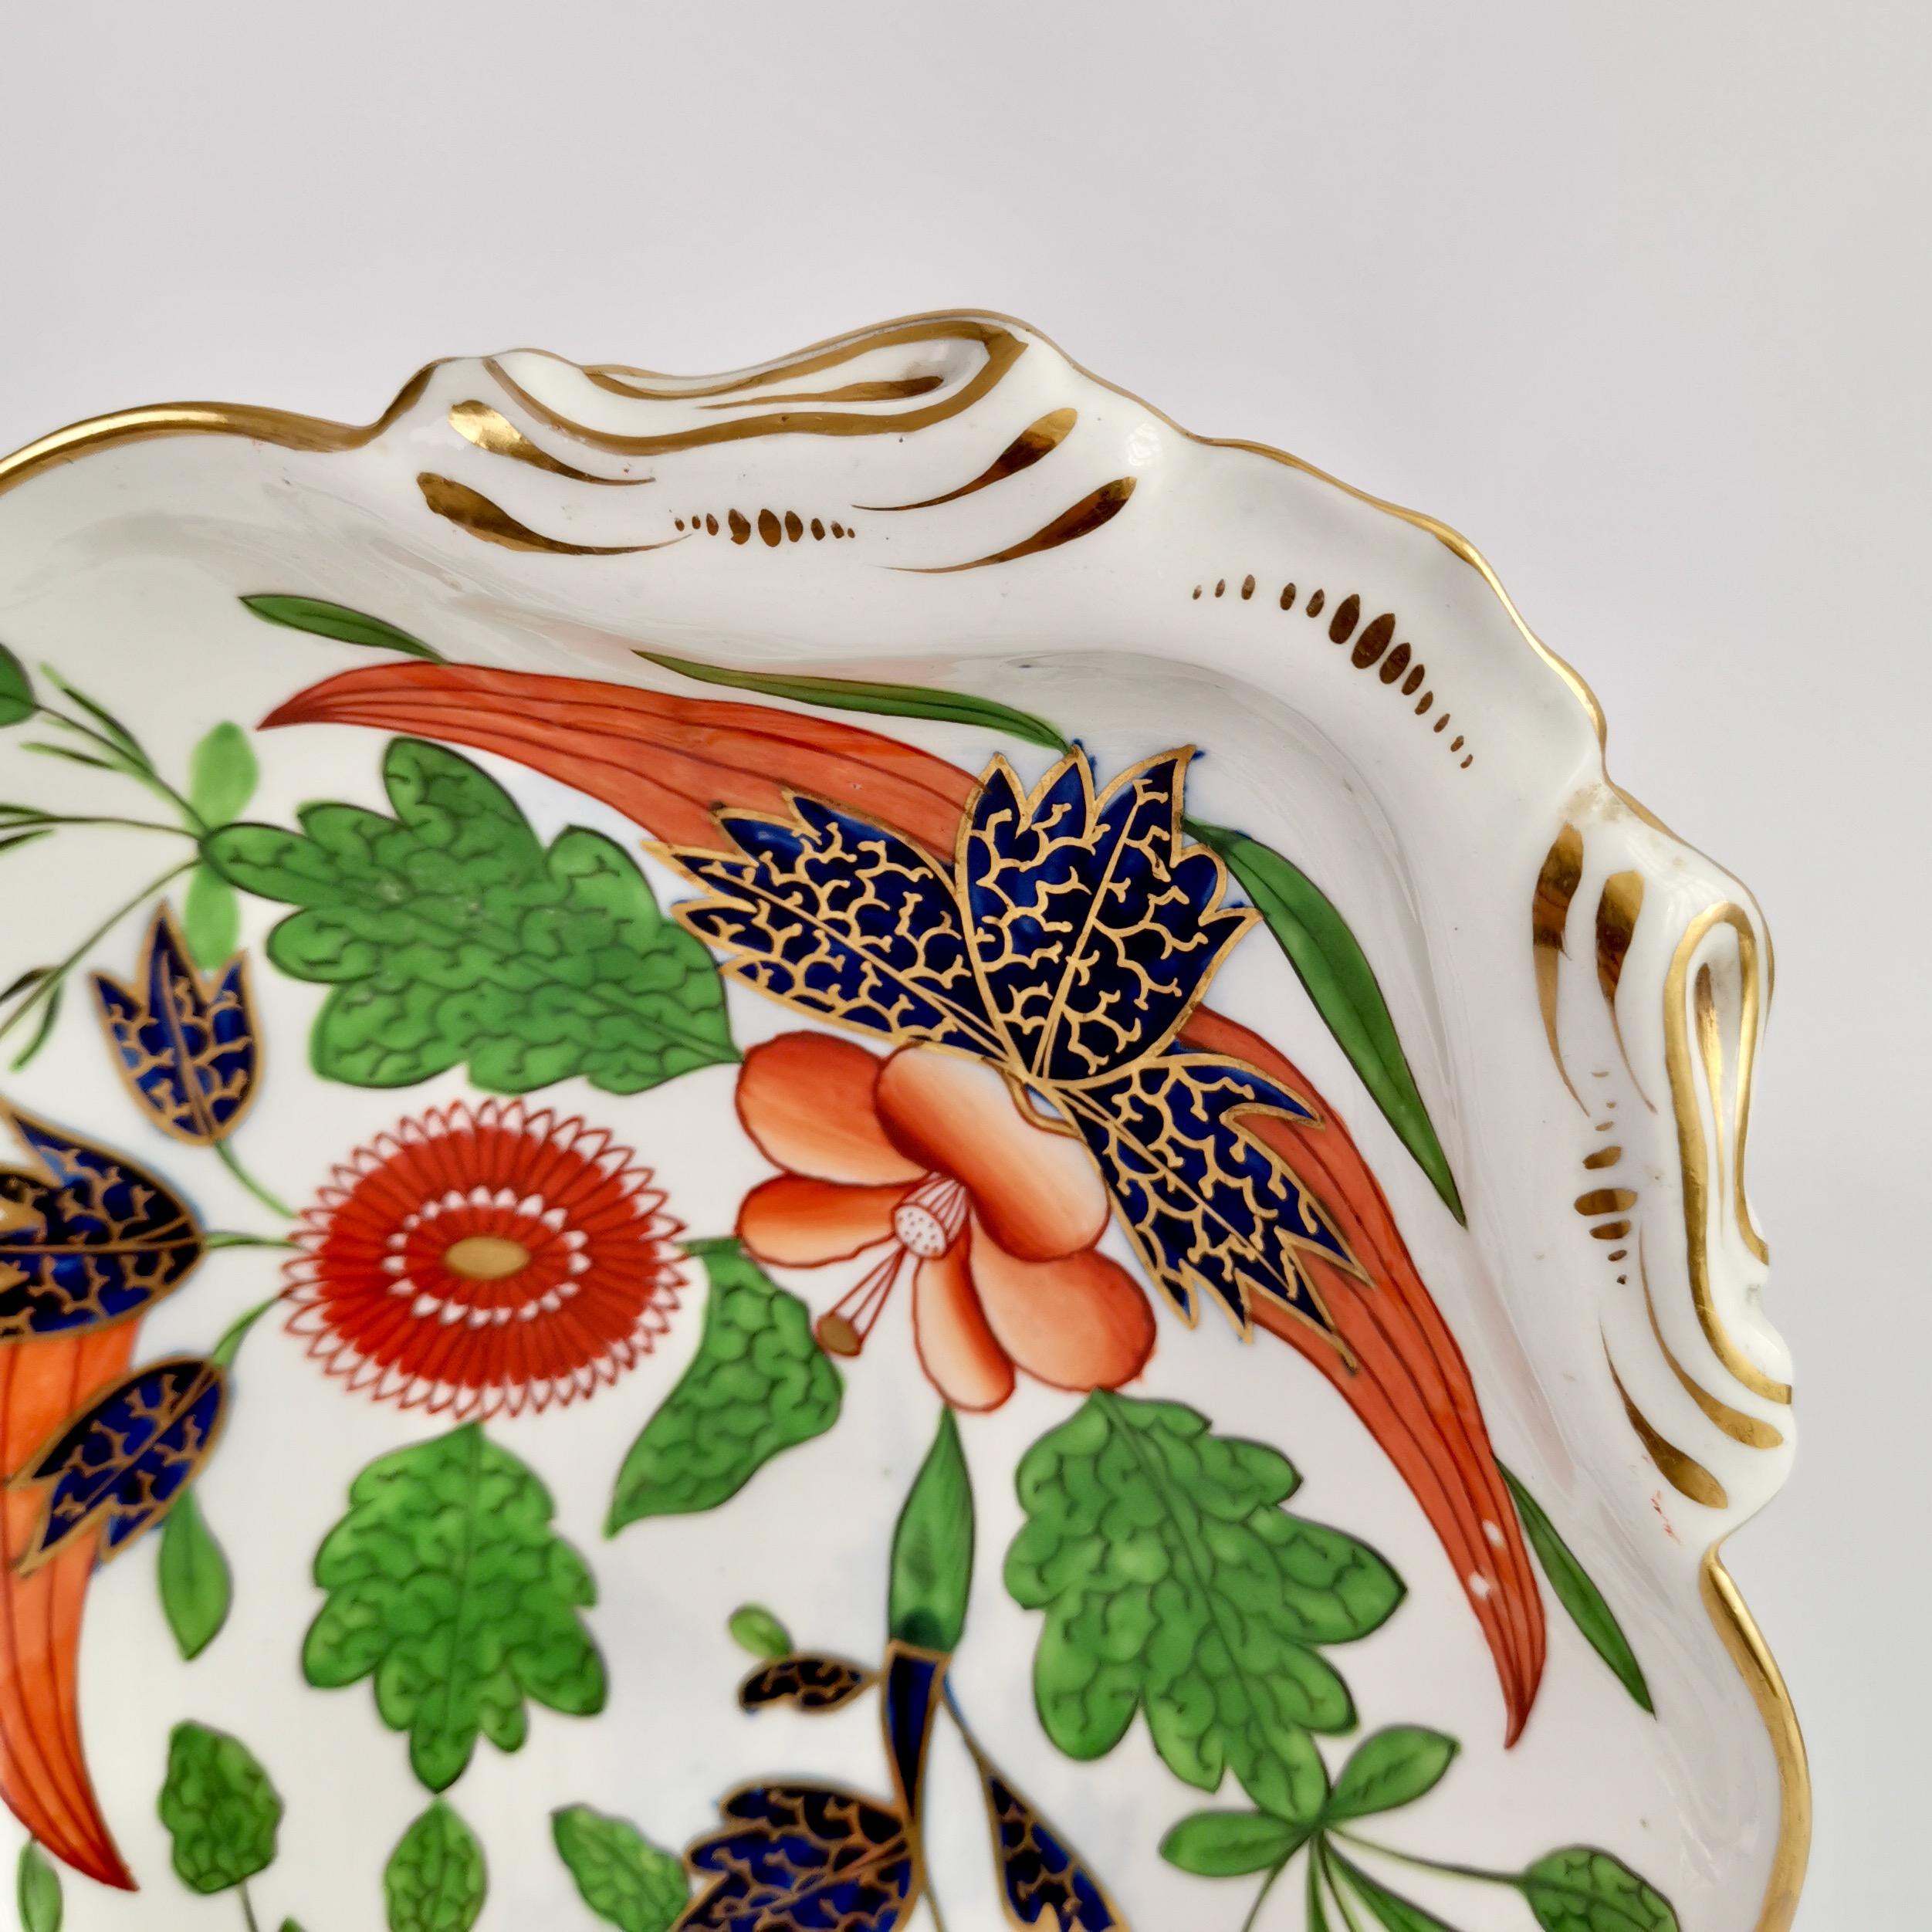 Early 19th Century John Rose Coalport Porcelain Dessert Service, Japan Imari Pattern, circa 1805